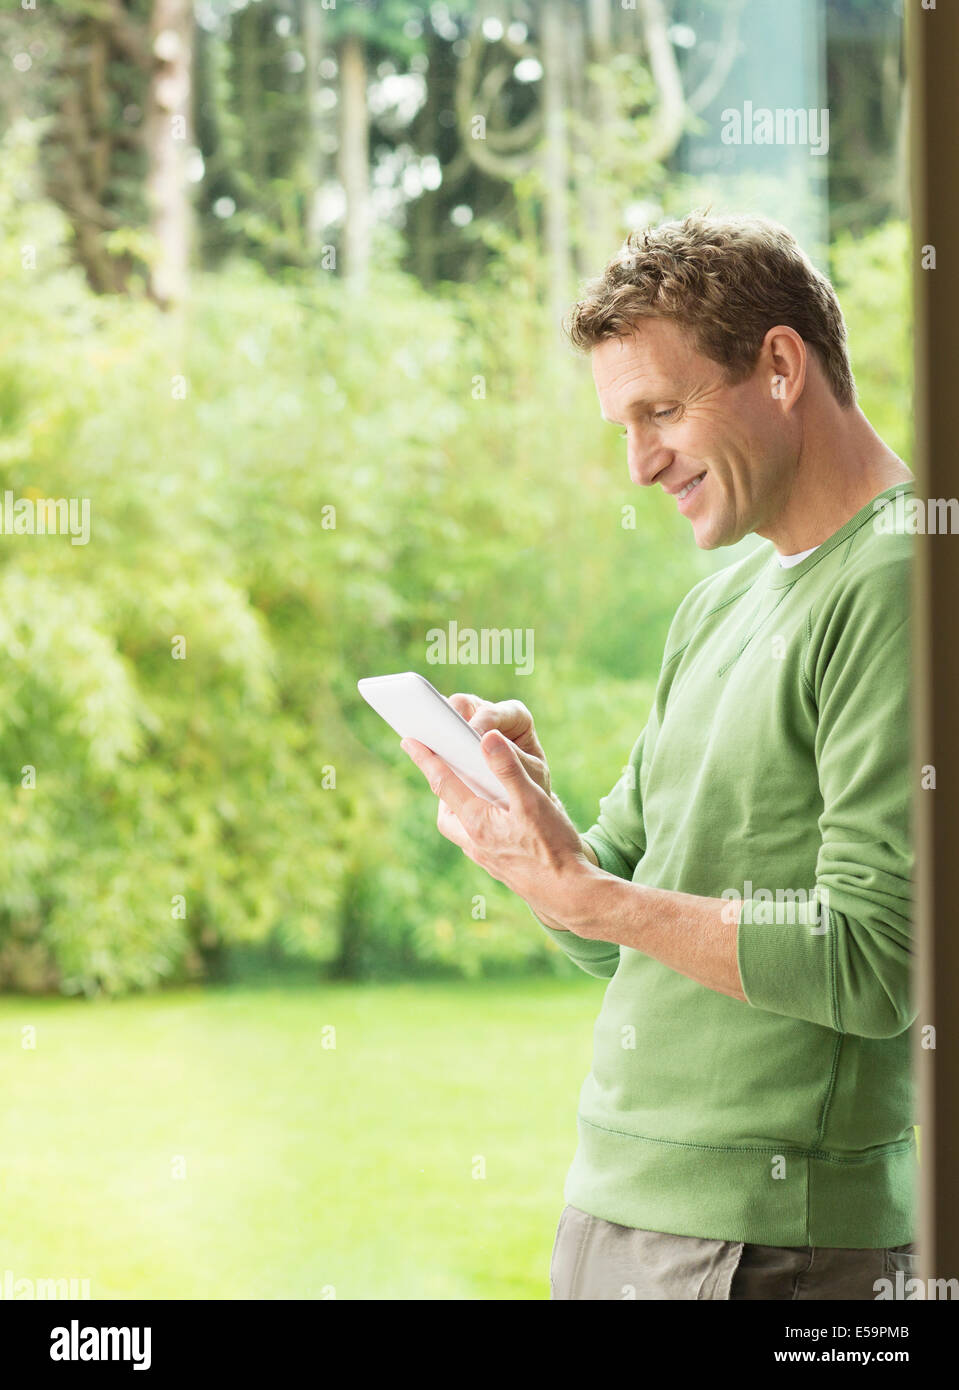 Man using digital tablet by window Stock Photo